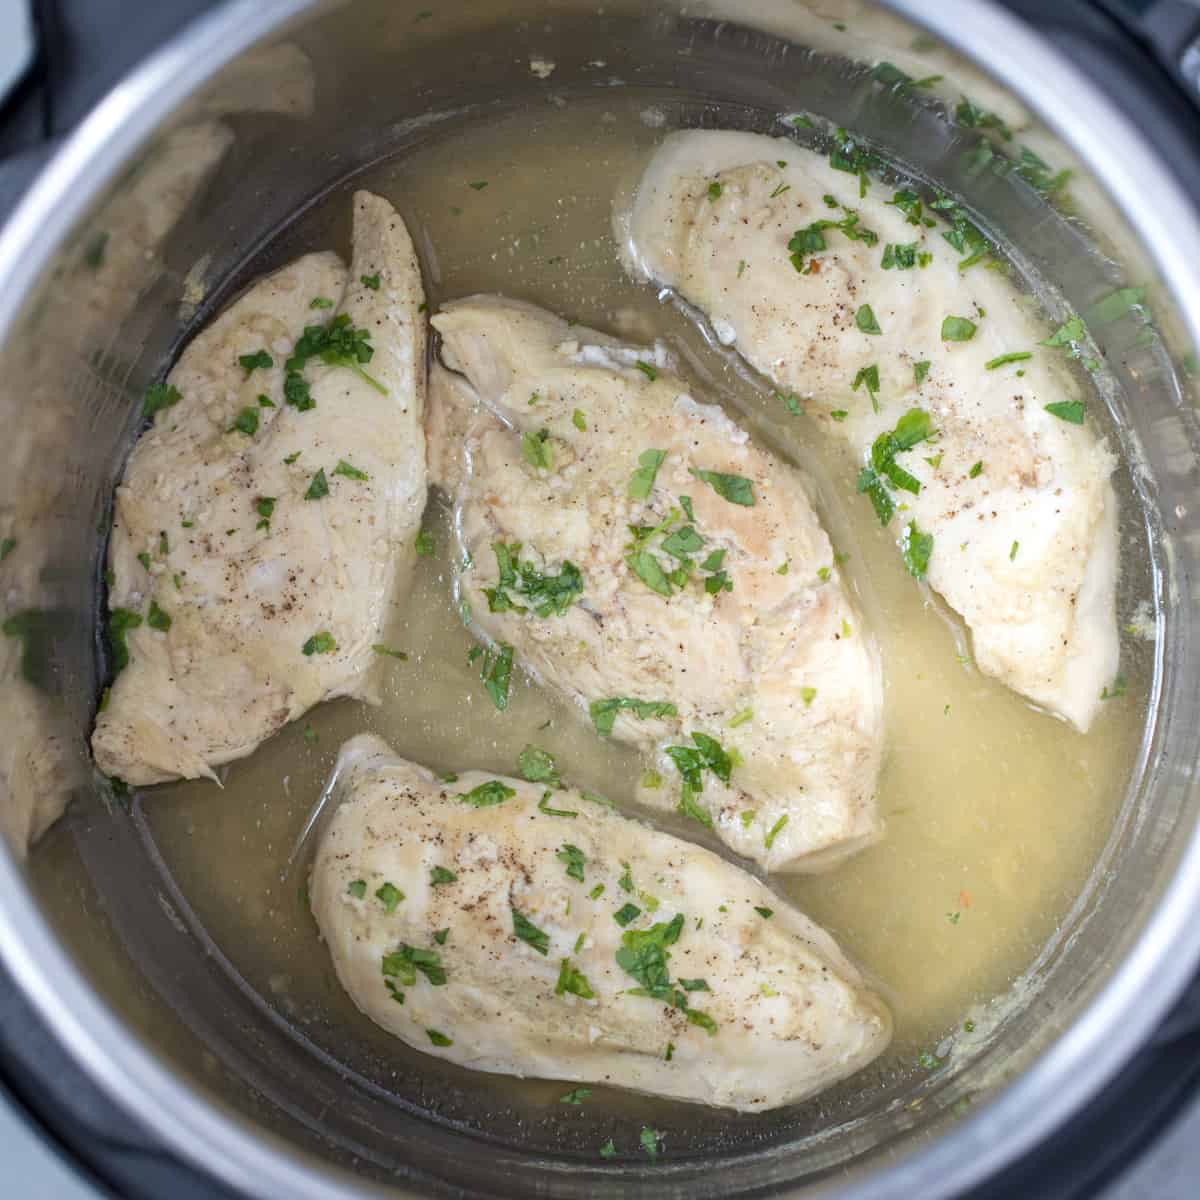 Perfect Instant Pot Chicken Breast Recipe (Fresh or Frozen)